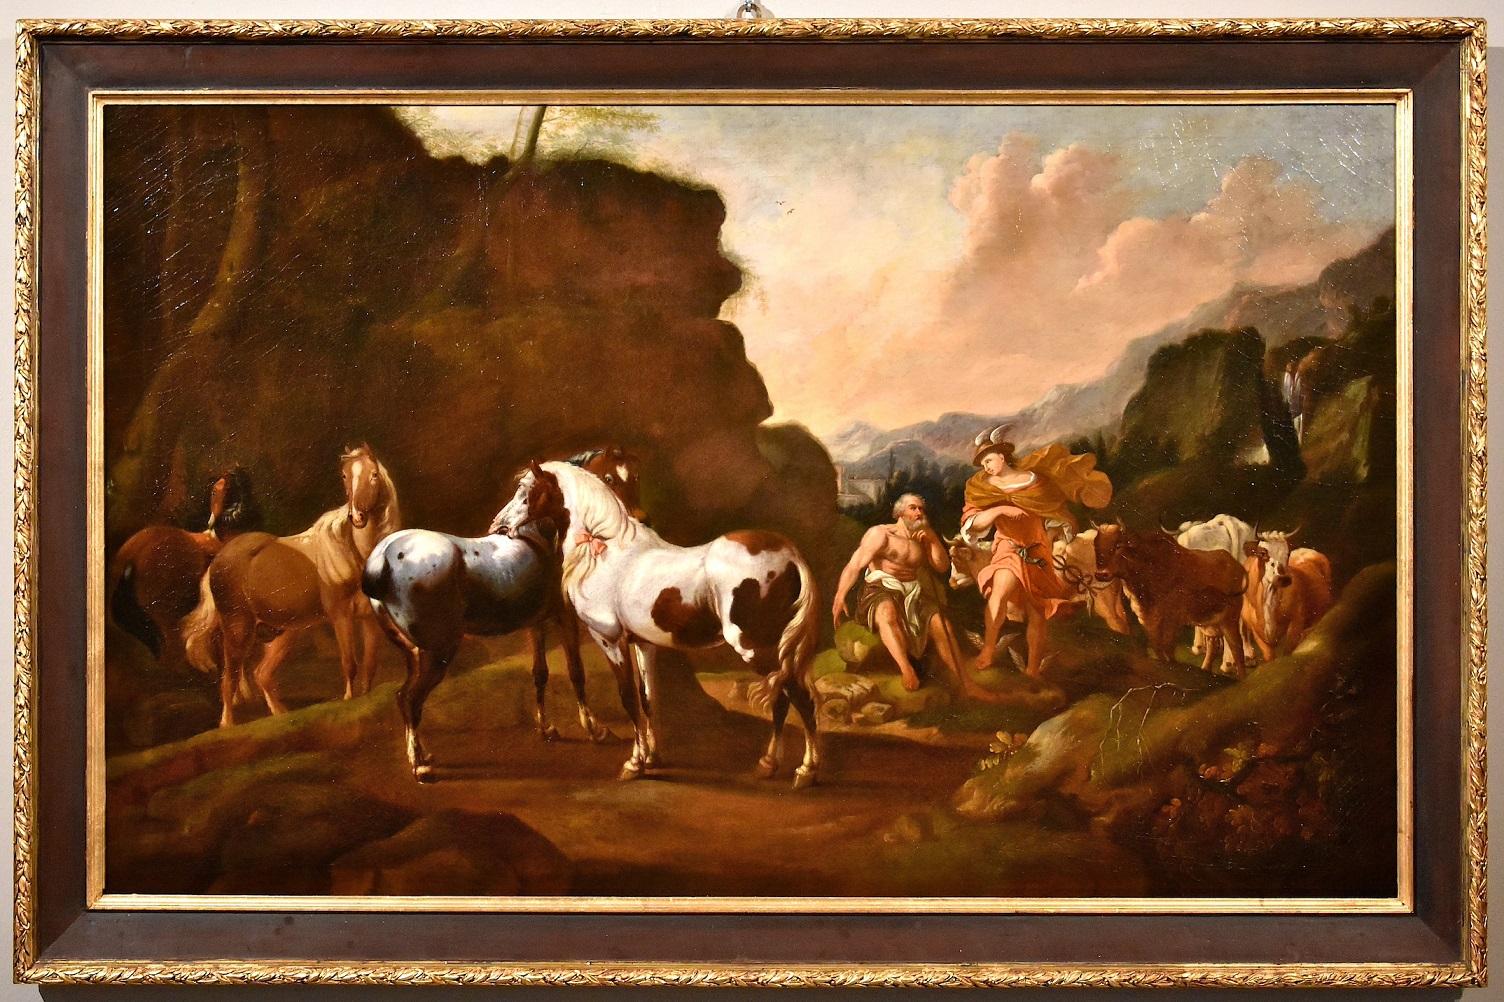 Johann Heinrich Roos (Otterberg 1631 - Frankfurt 1685) Landscape Painting - Roos Landscape Myth Mercury Horse Paint Oil on canvas Old master 17th Century